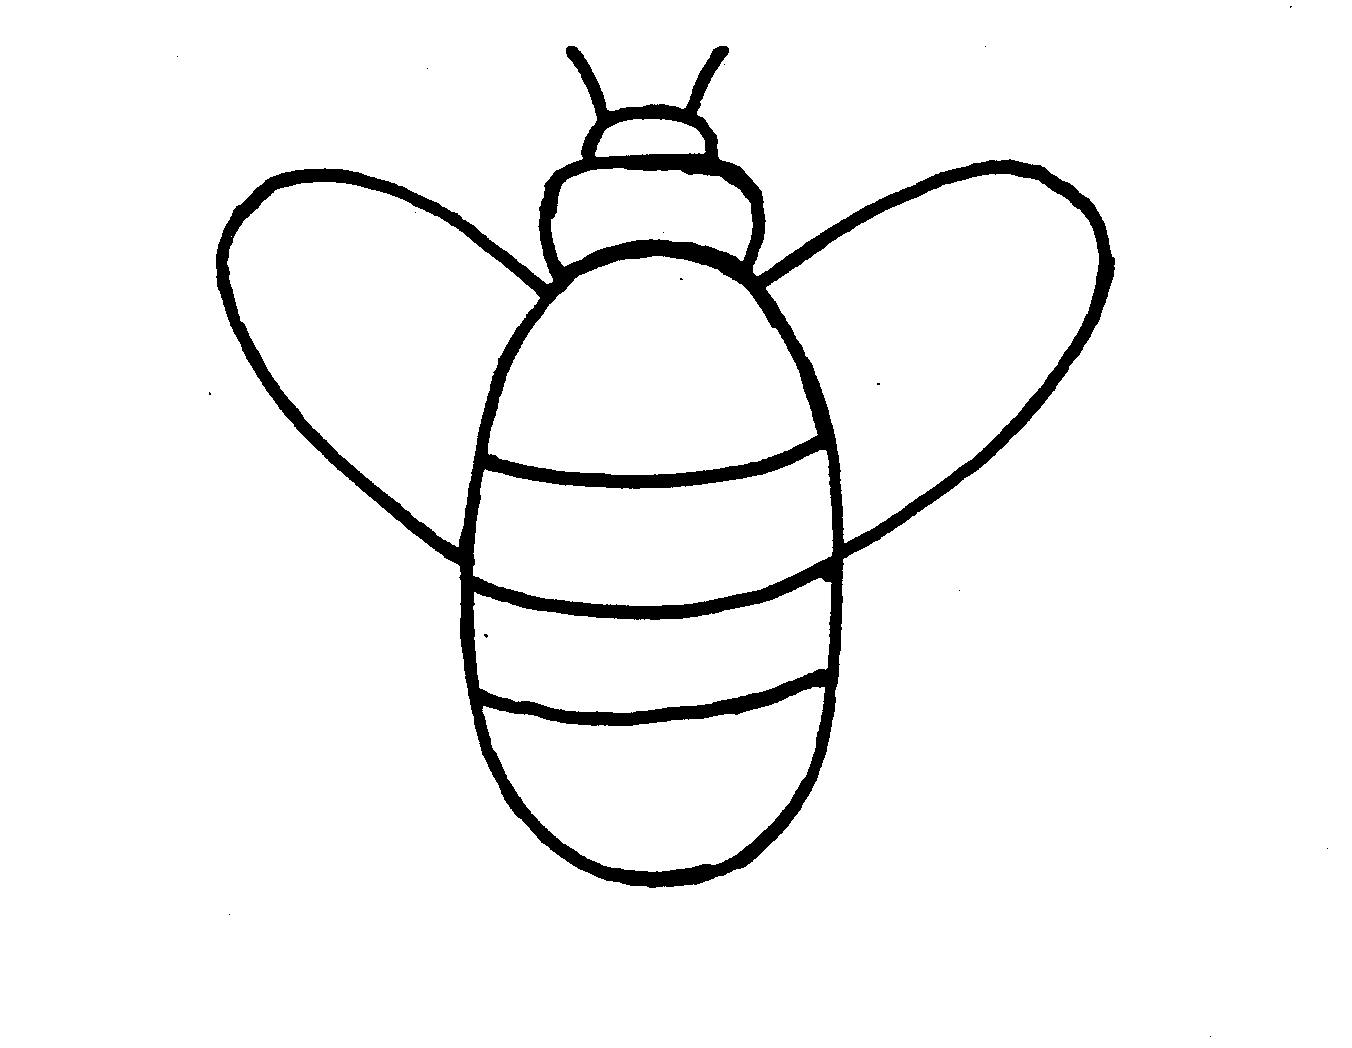 Trademark Logo BEE